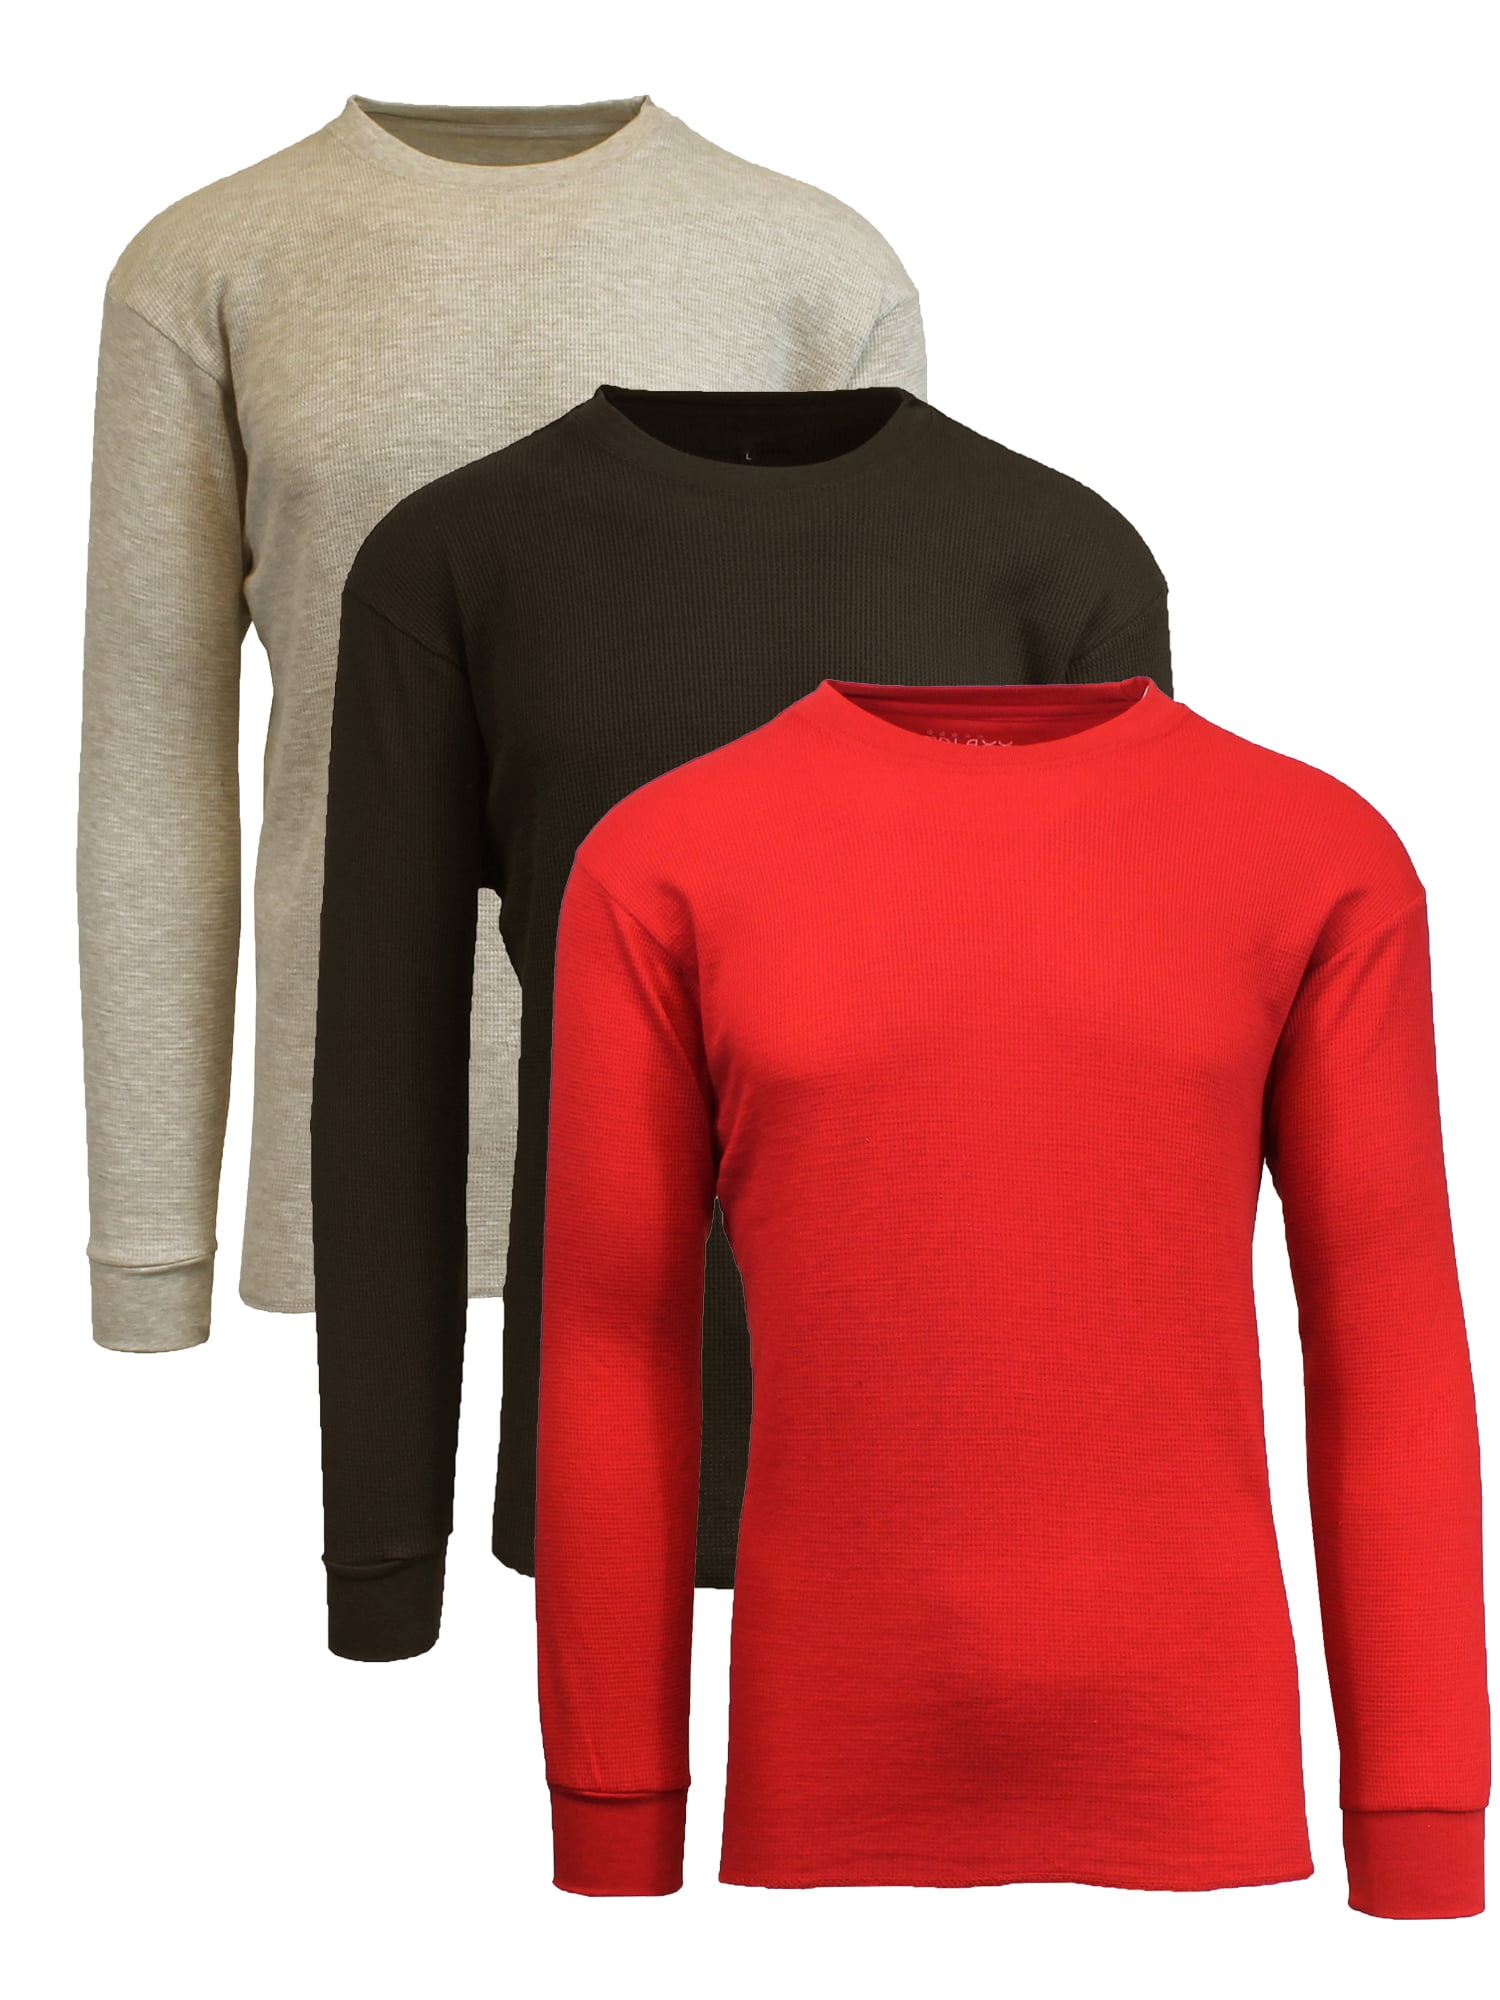 Men's Long Sleeve Thermal Shirts (3-Pack) - Walmart.com